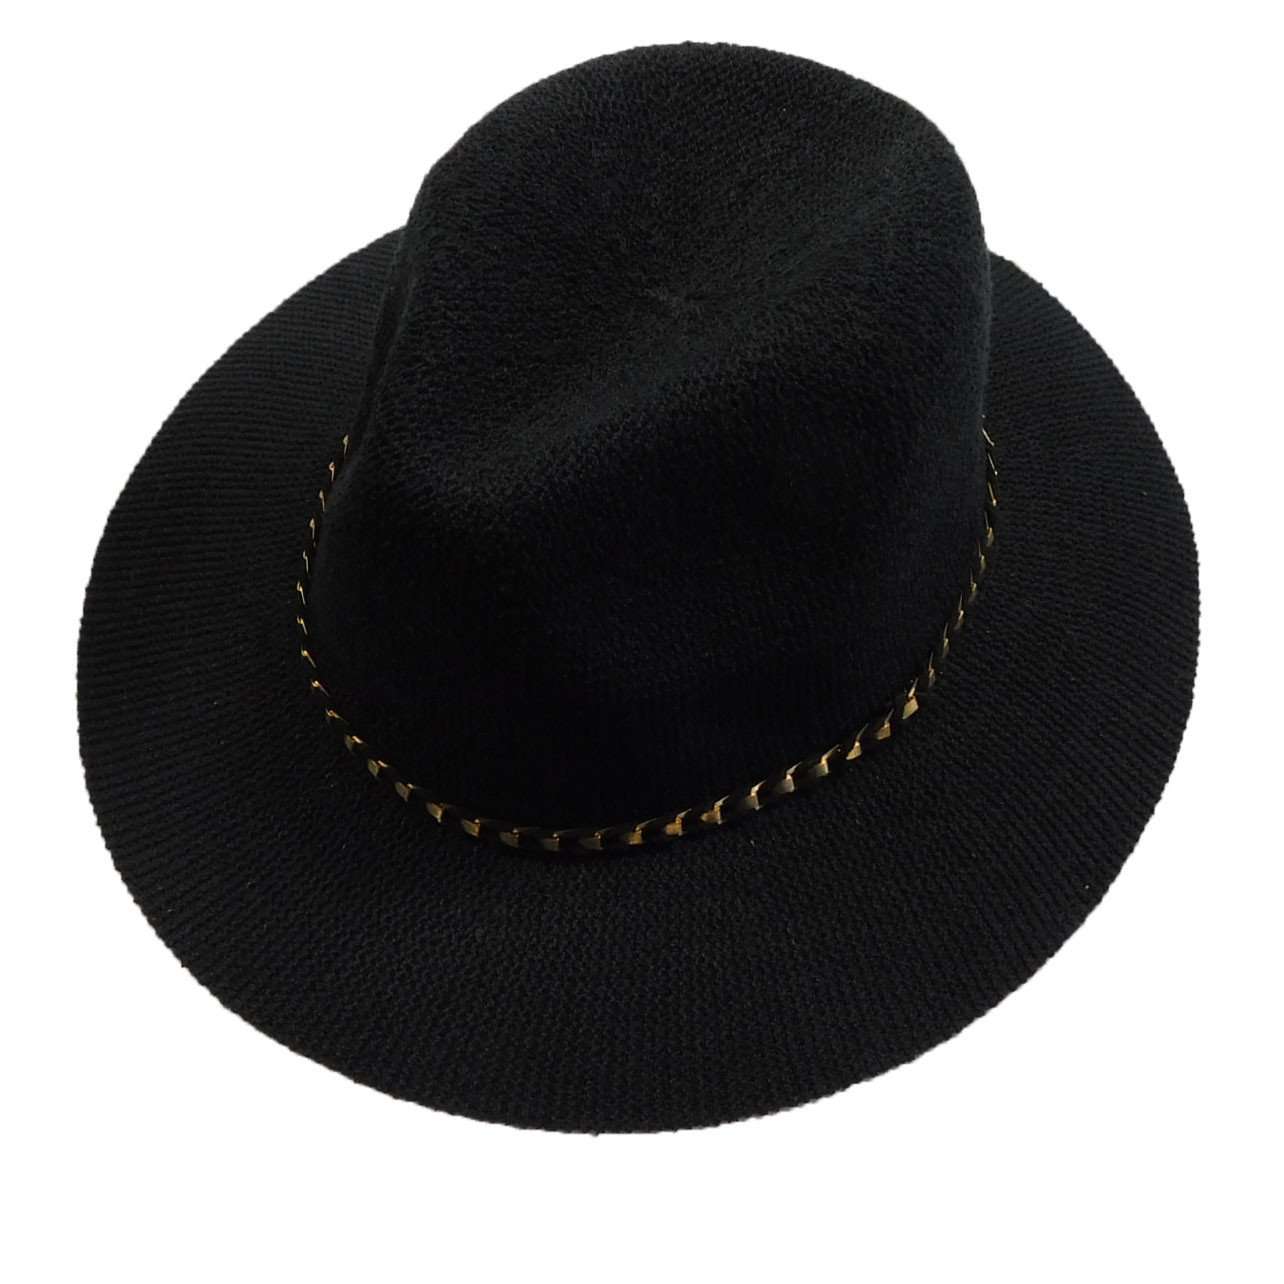 Knitted Panama Hat with Gold Band - Black Safari Hat Boardwalk Style Hats WWda3124BK Black  